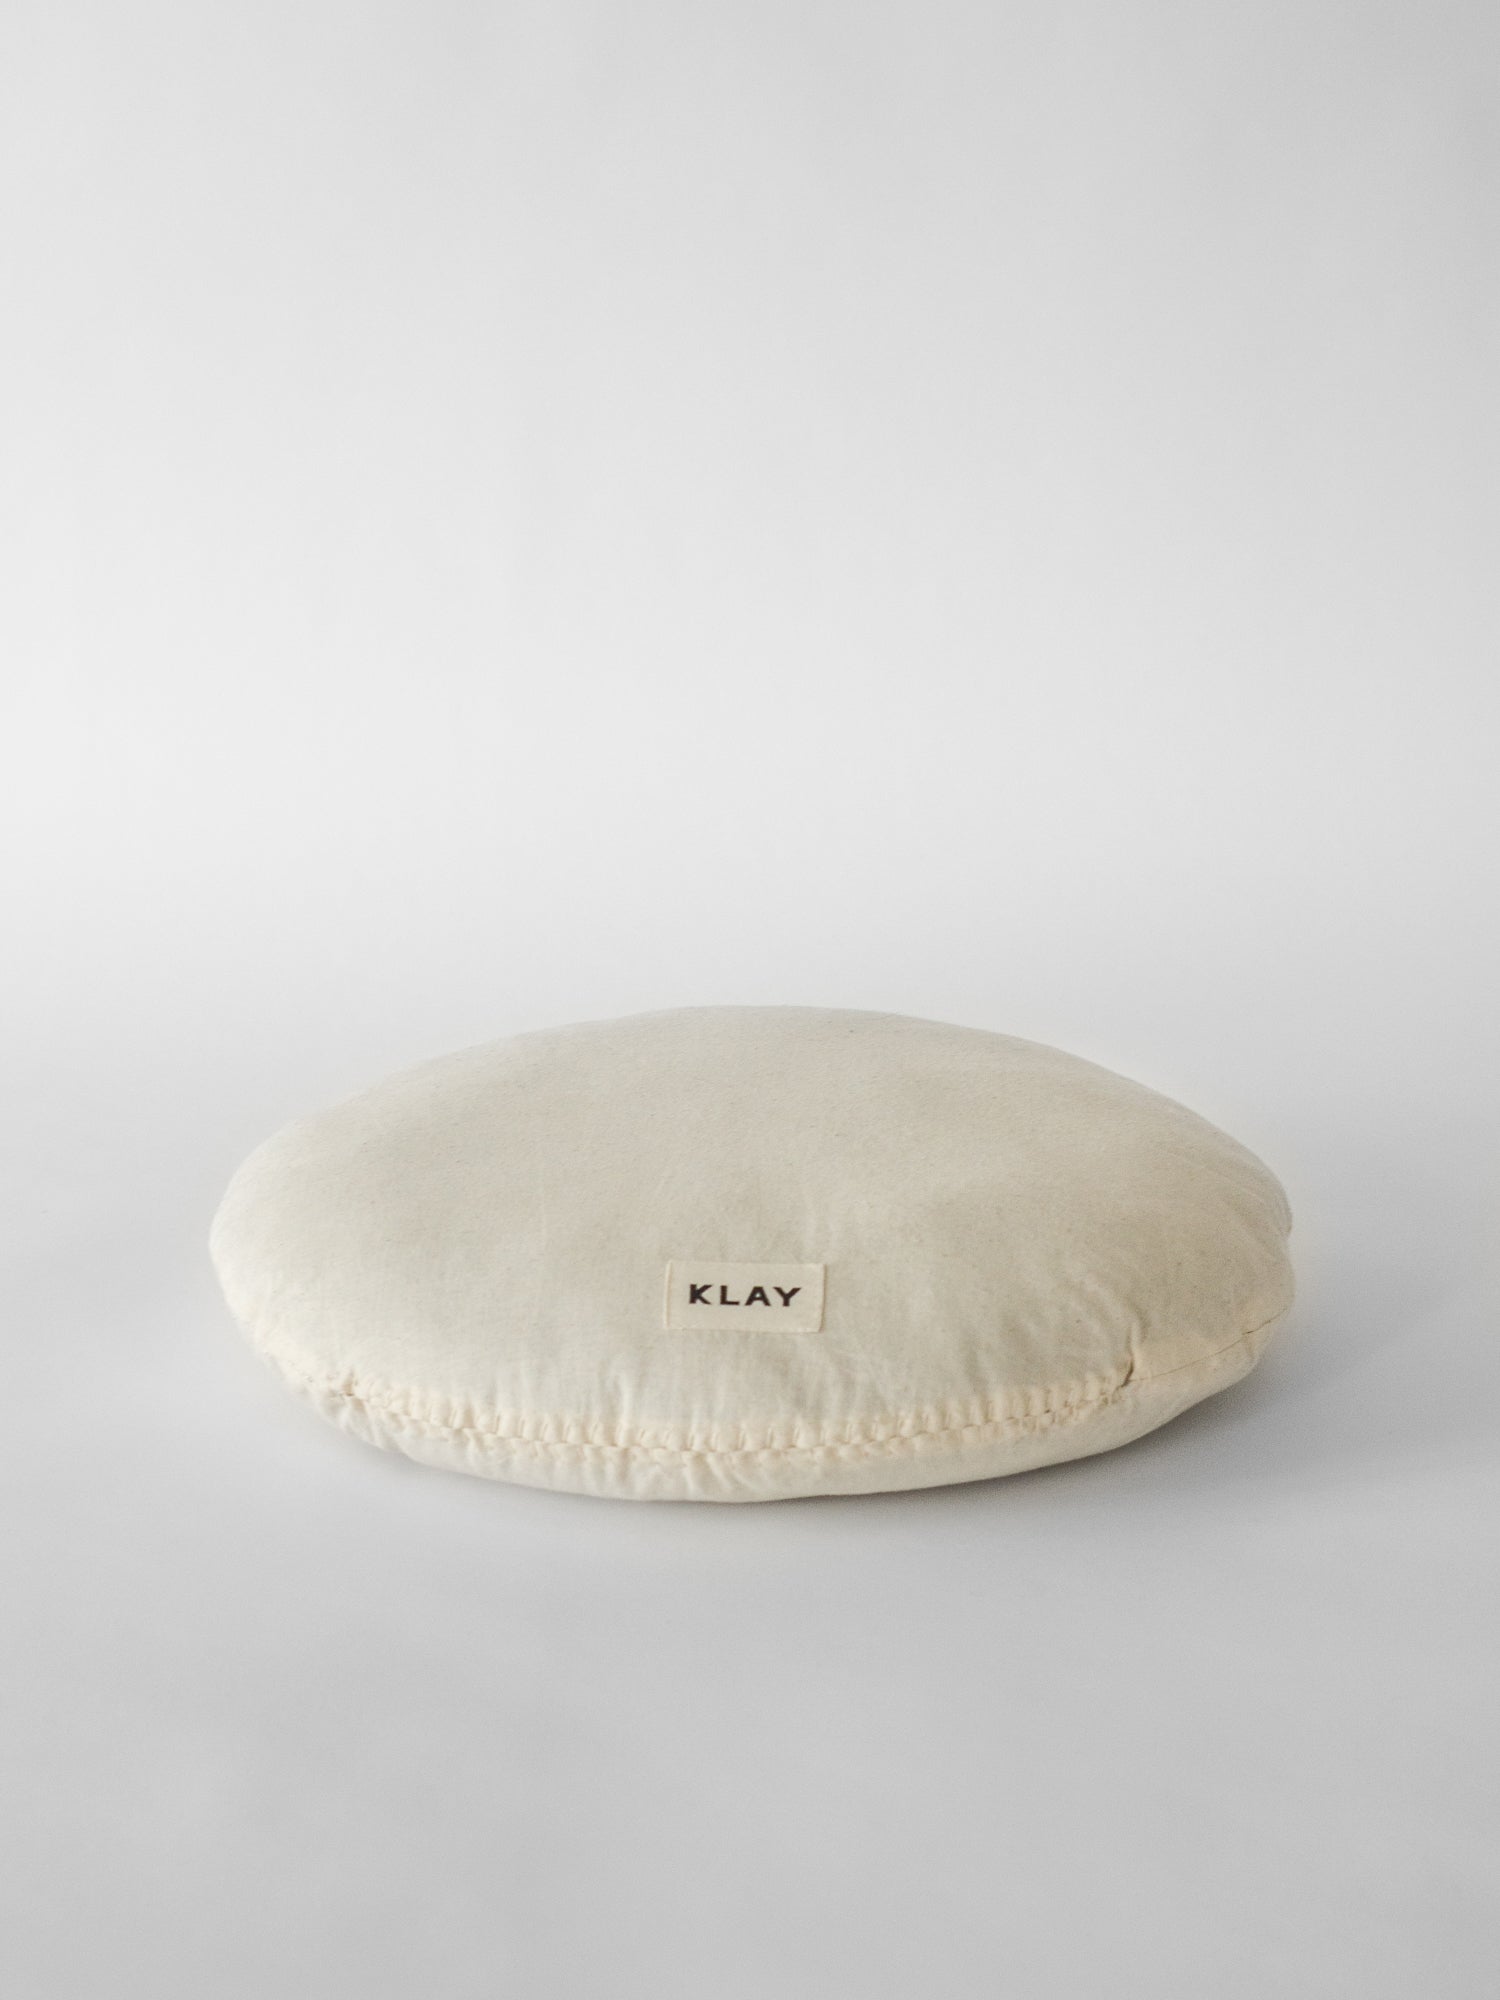 SALE Disc Squab Cushion, 'Plum/ Straw' Plaid